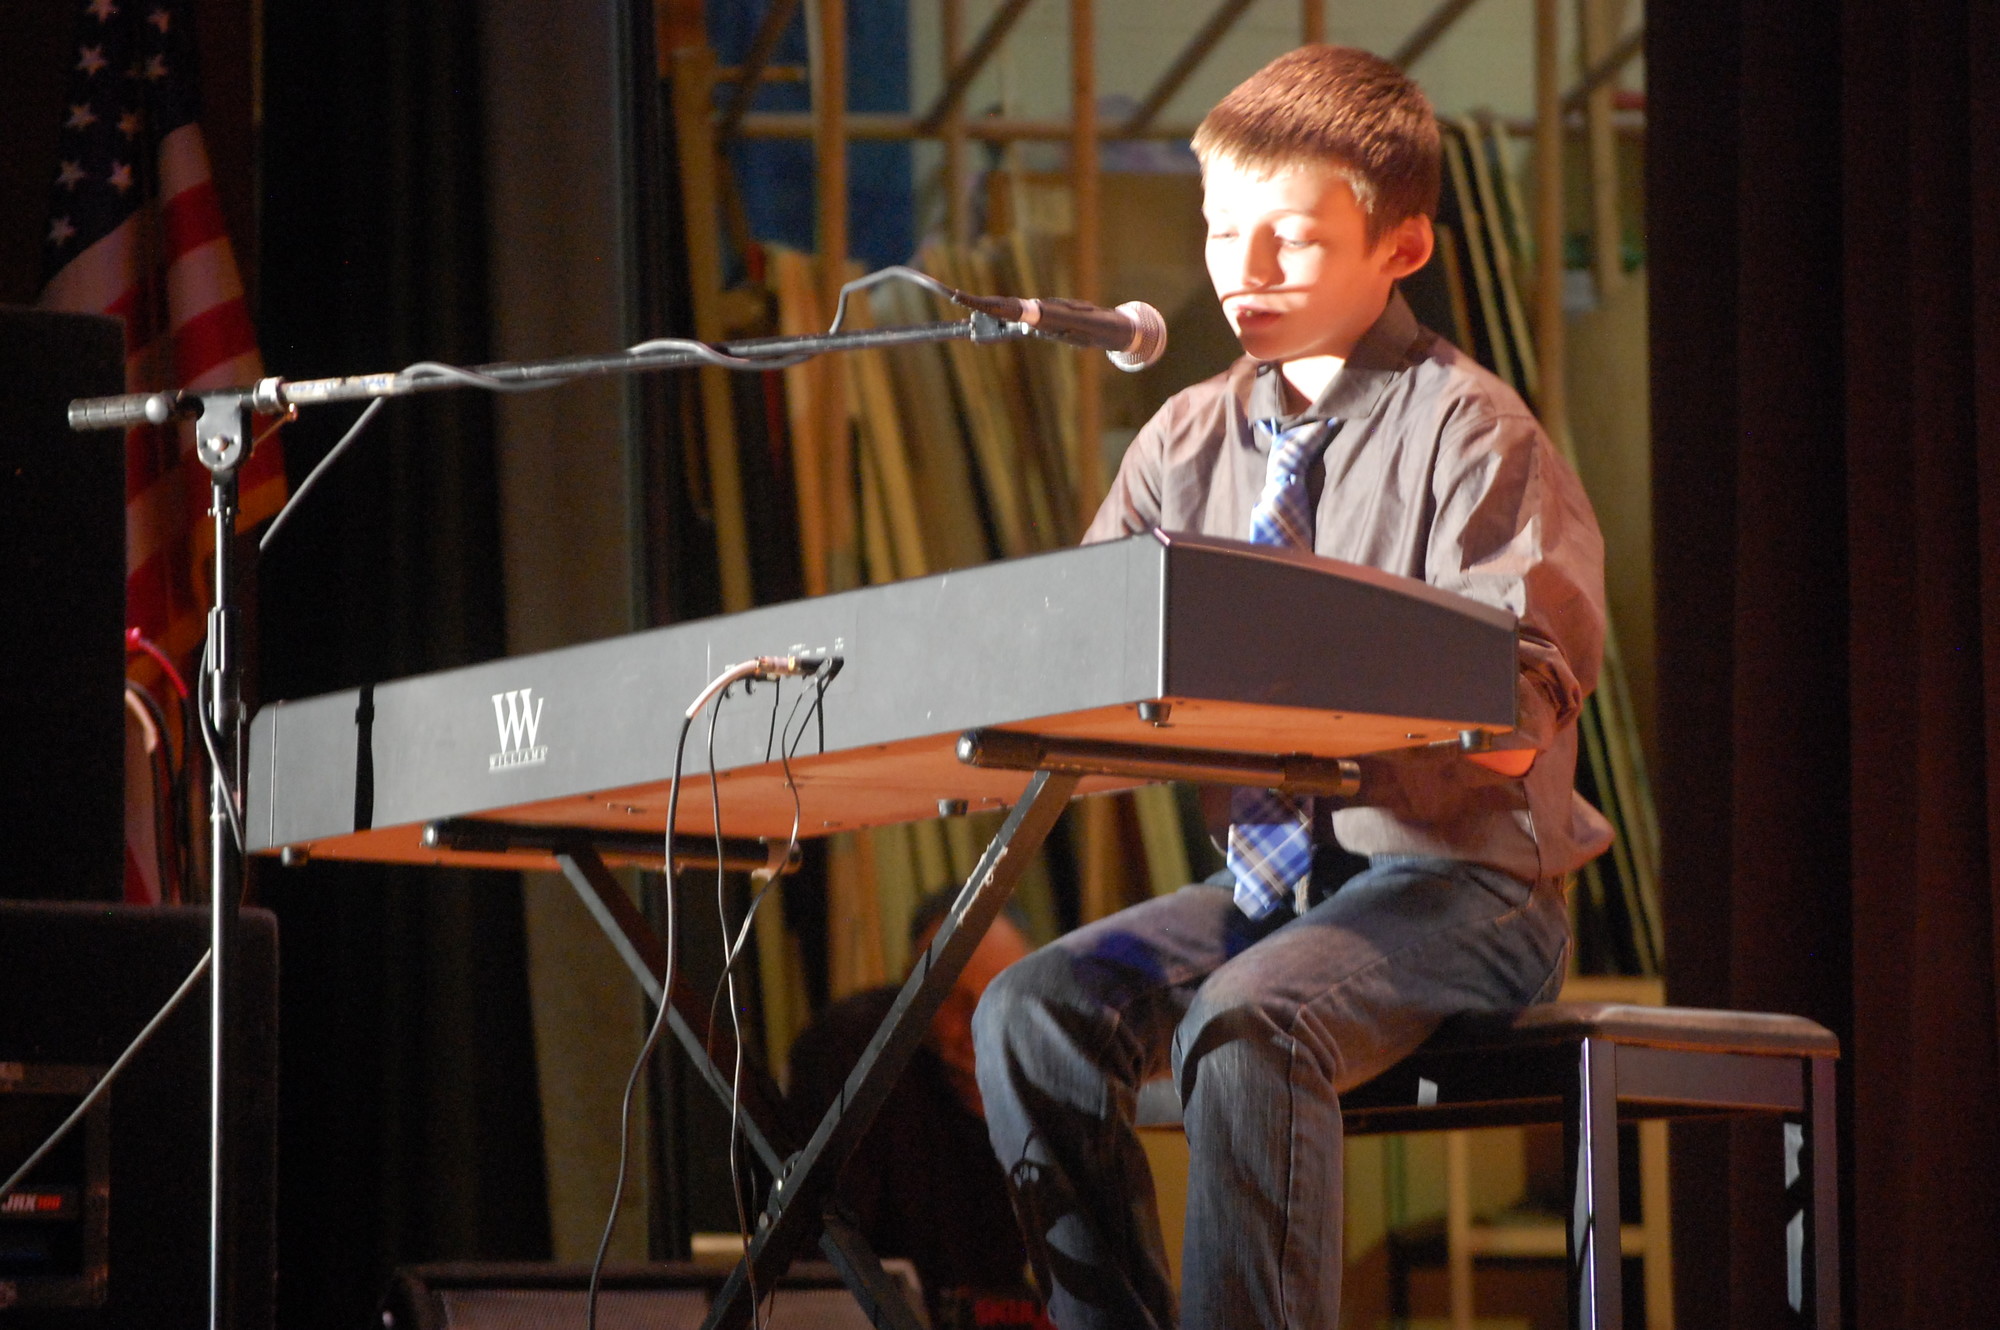 Liam McDonald sang and played the piano.